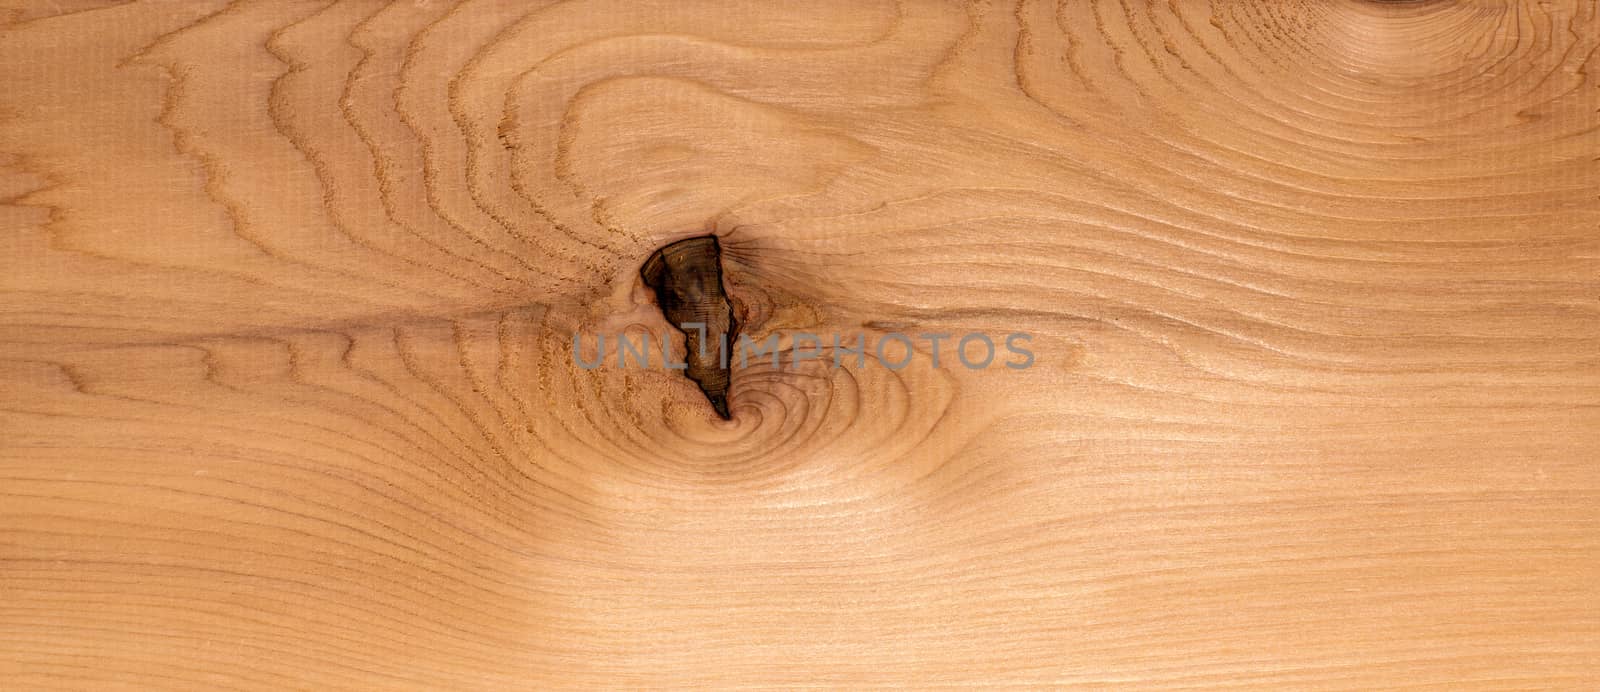 Cedar Plank Texture  by viscorp